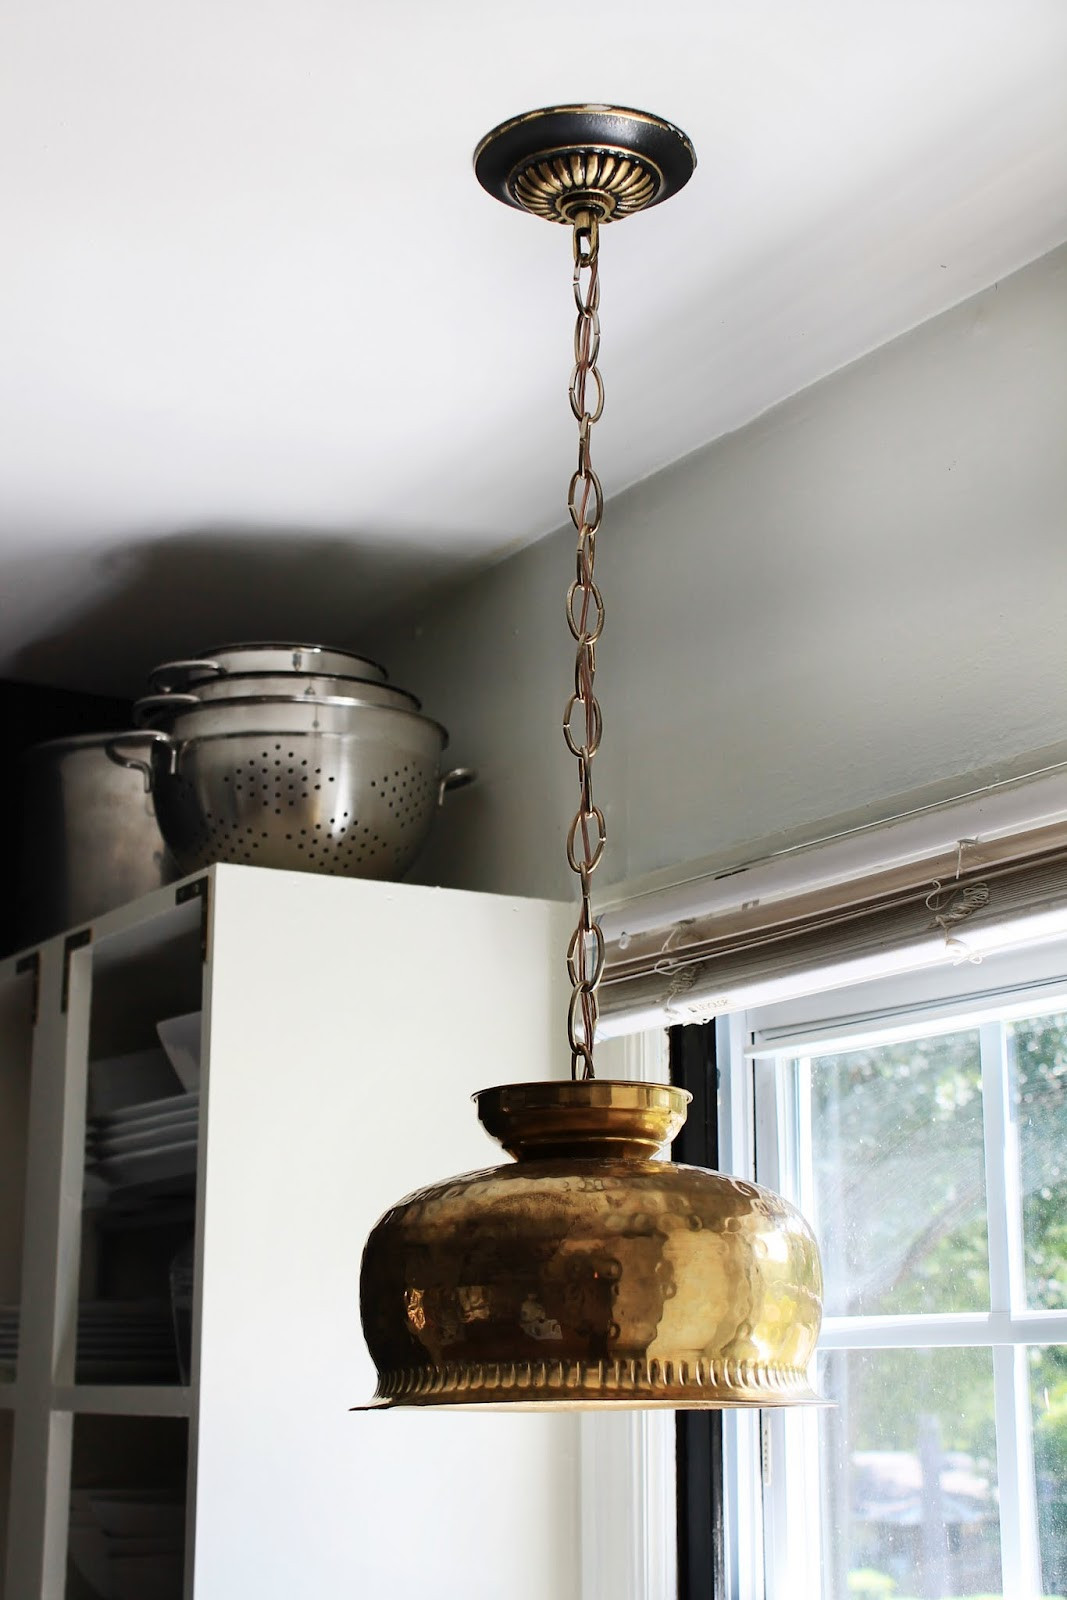 Best ideas about DIY Kitchen Lights
. Save or Pin hunted interior DIY Brass Bowl Pendant Kitchen Sneak Peek Now.